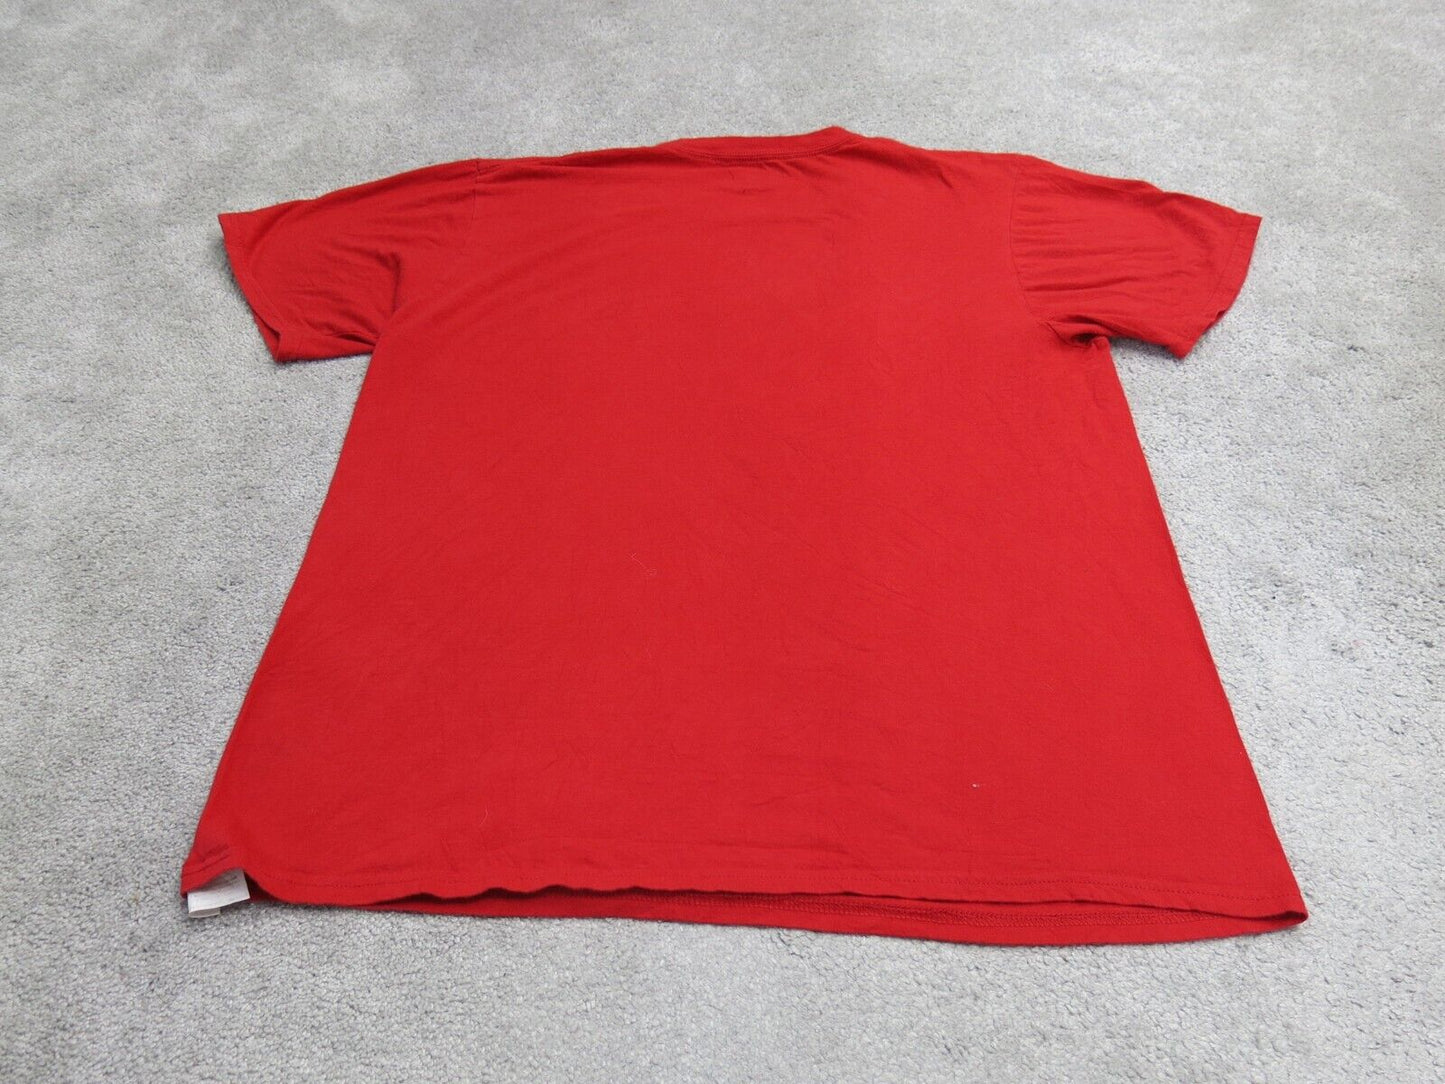 NBA Mens Baseball T Shirts Casual Short Sleeves Crew Neck Red Size Large